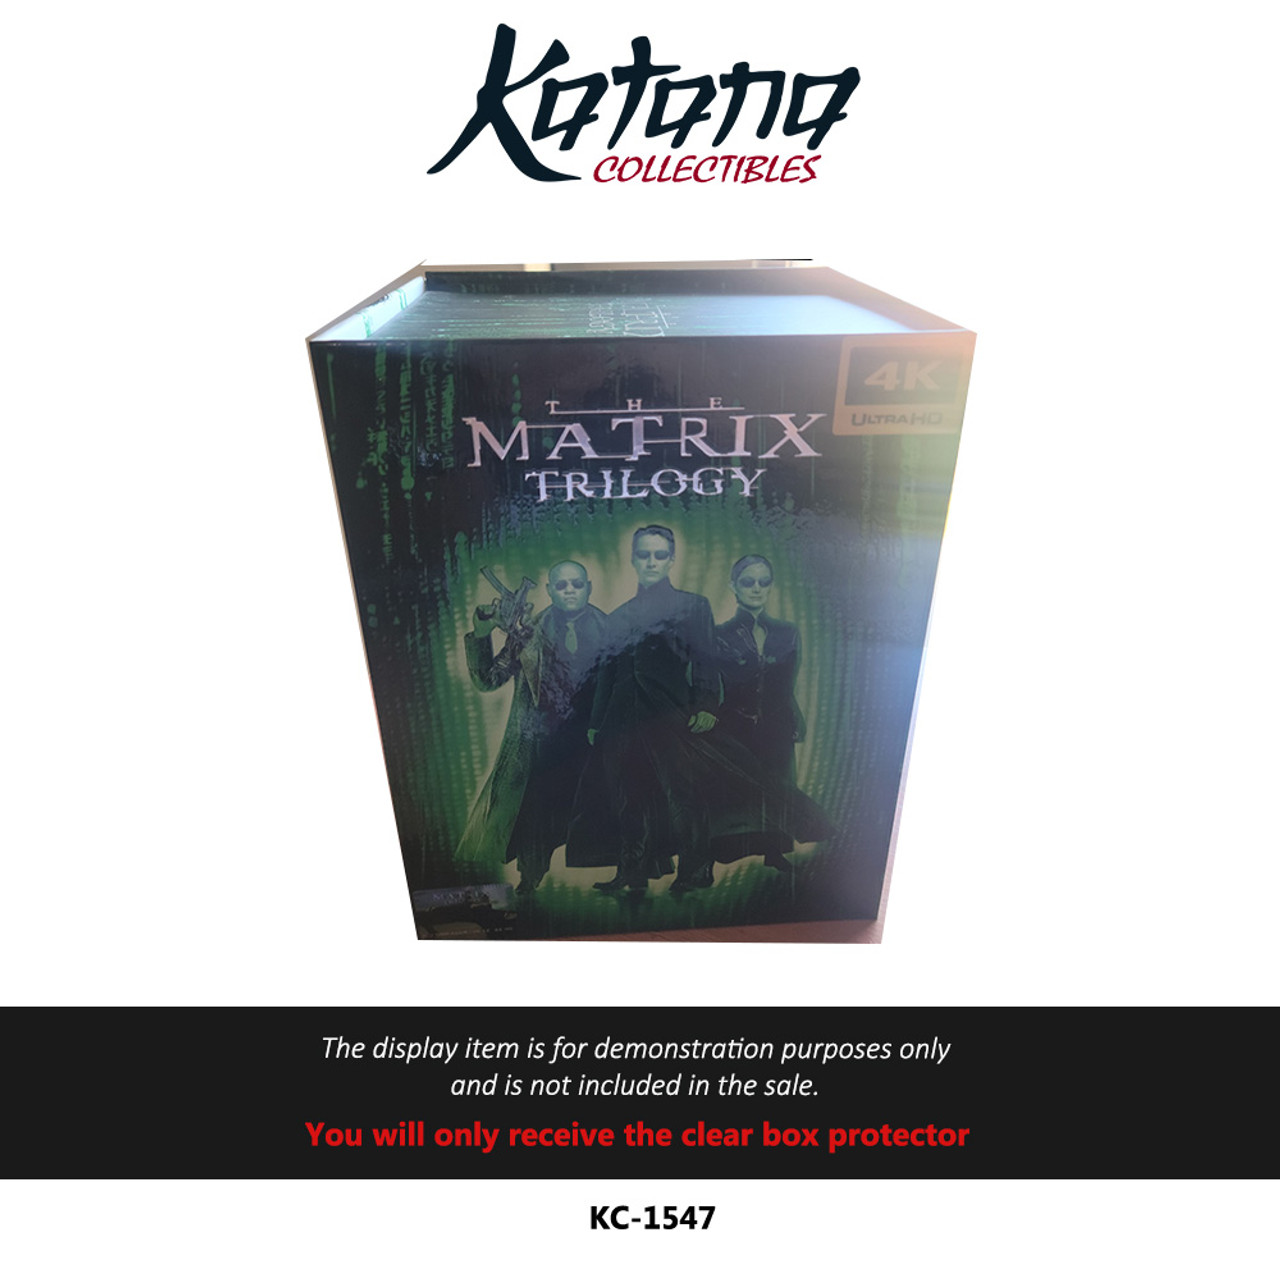 Katana Collectibles Protector For The Matrix Trilogy UHD